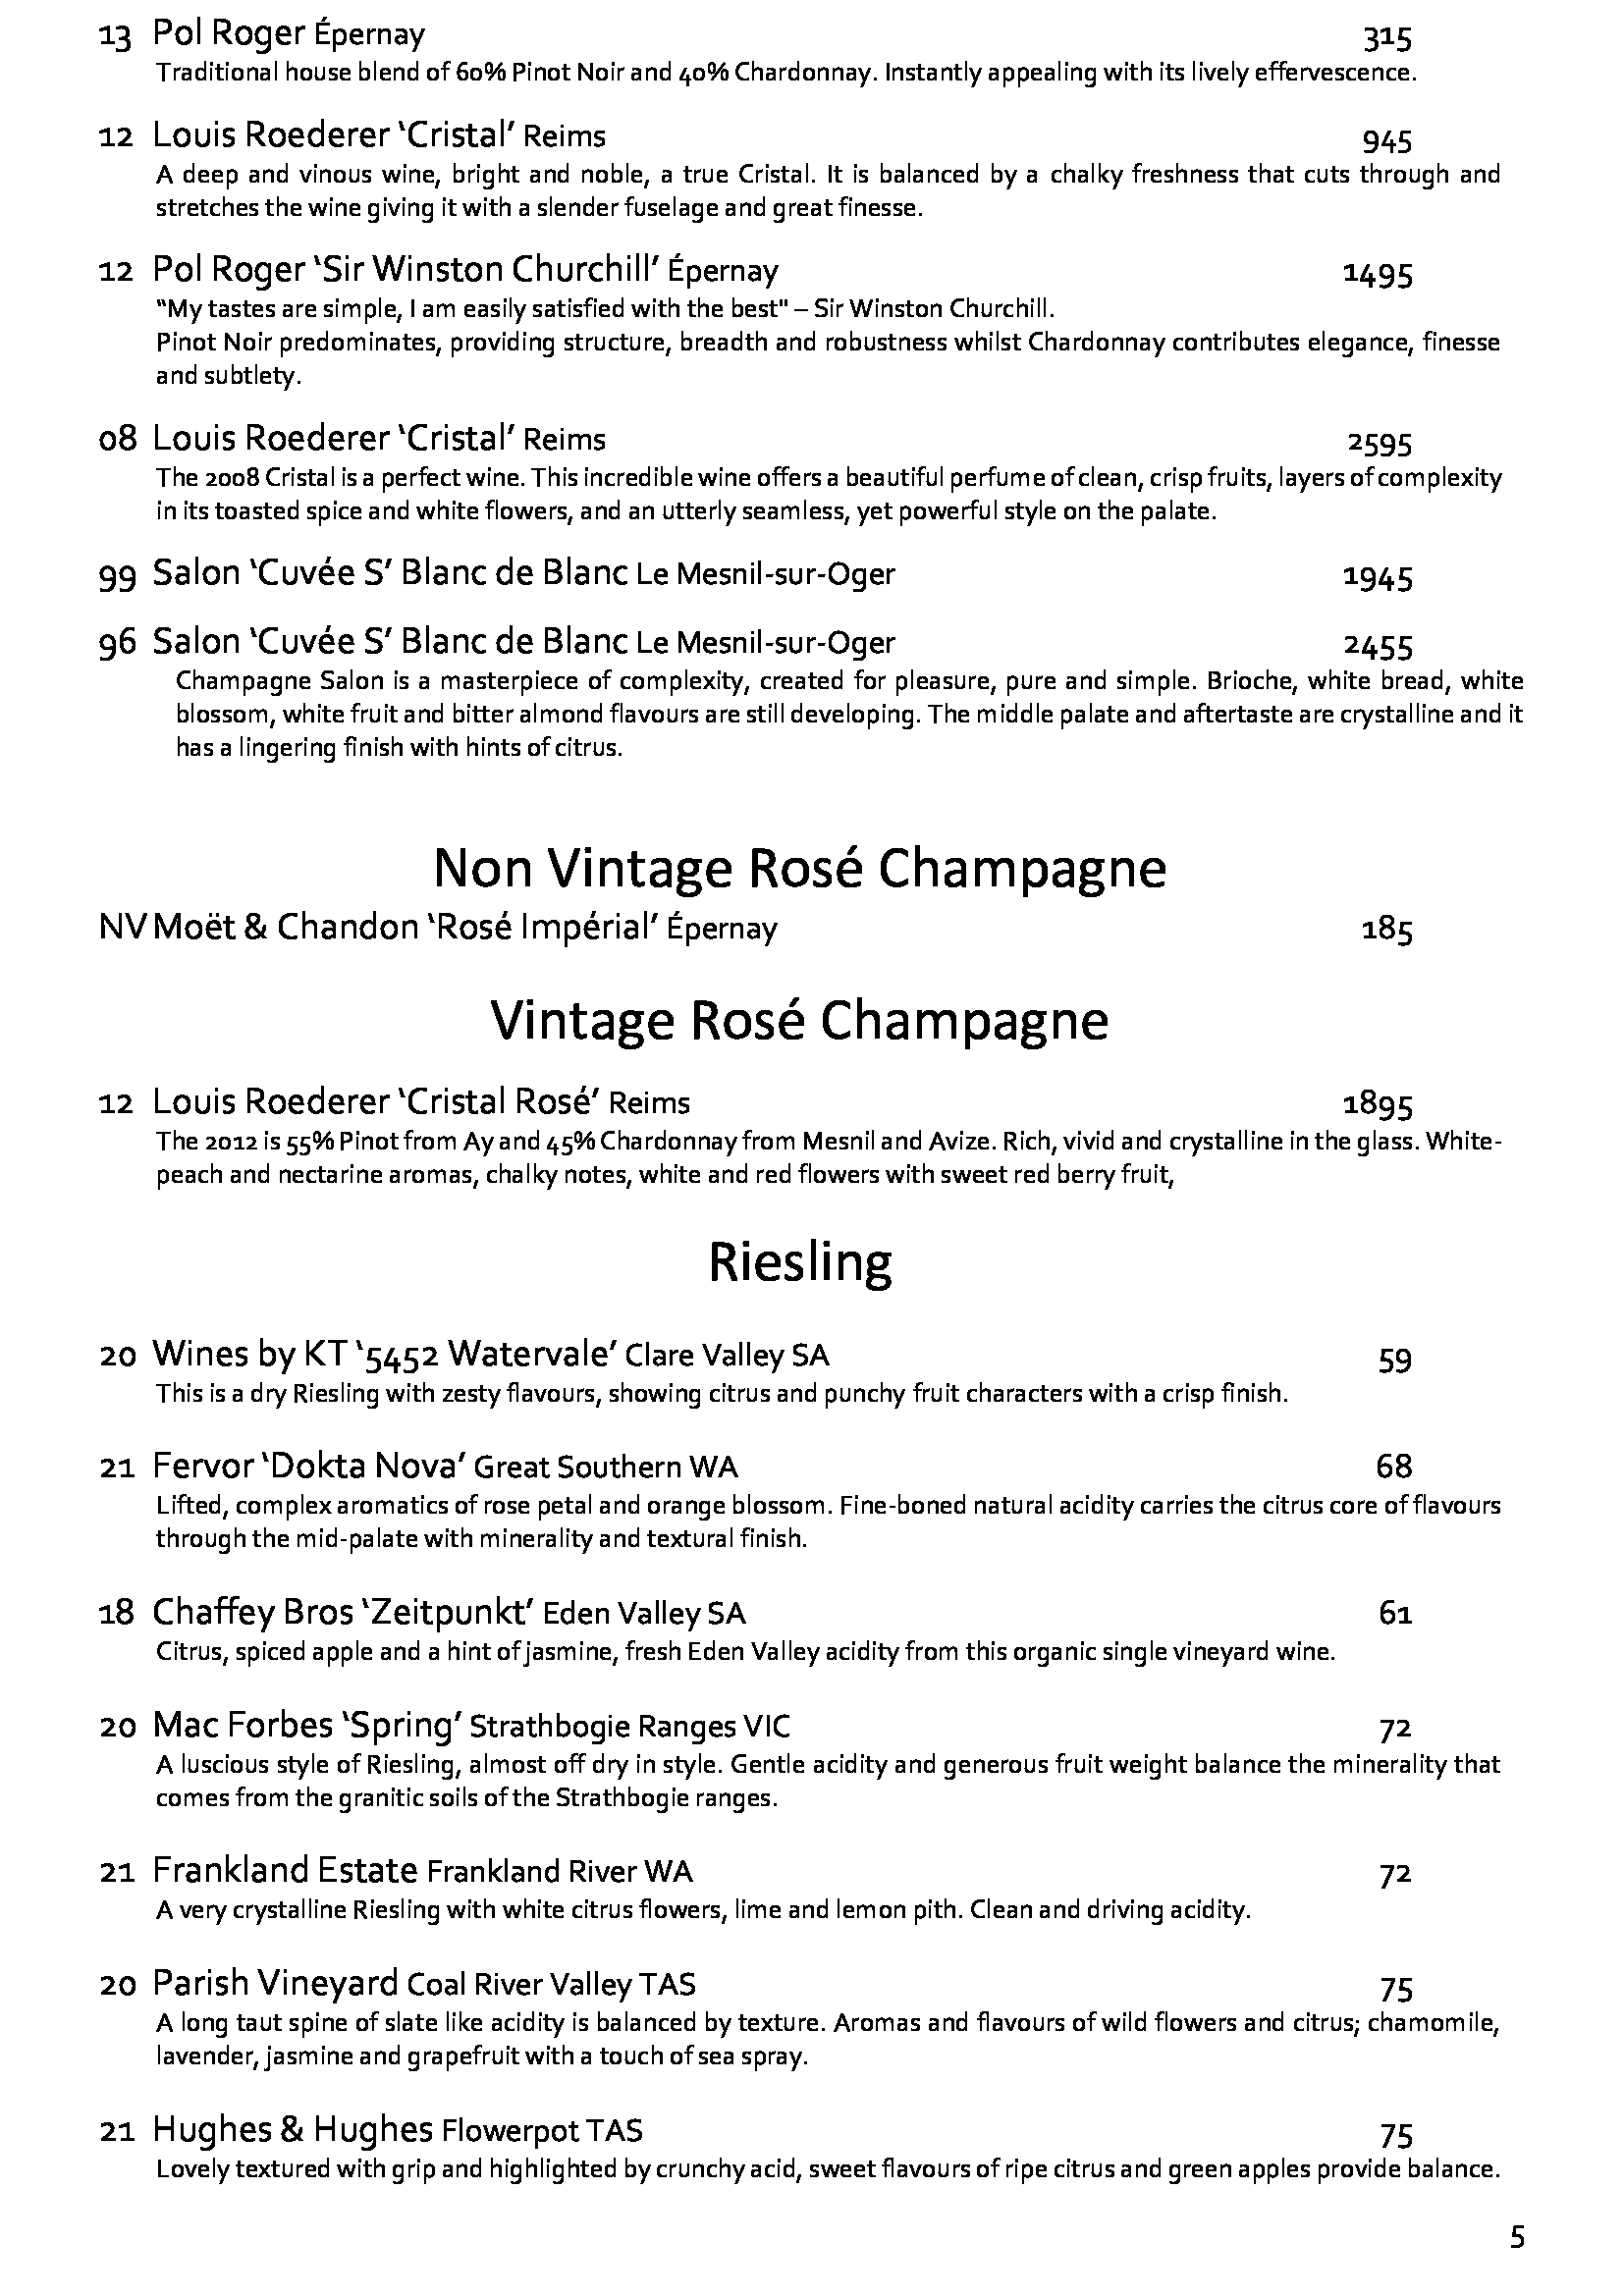 Wine List March 22 5